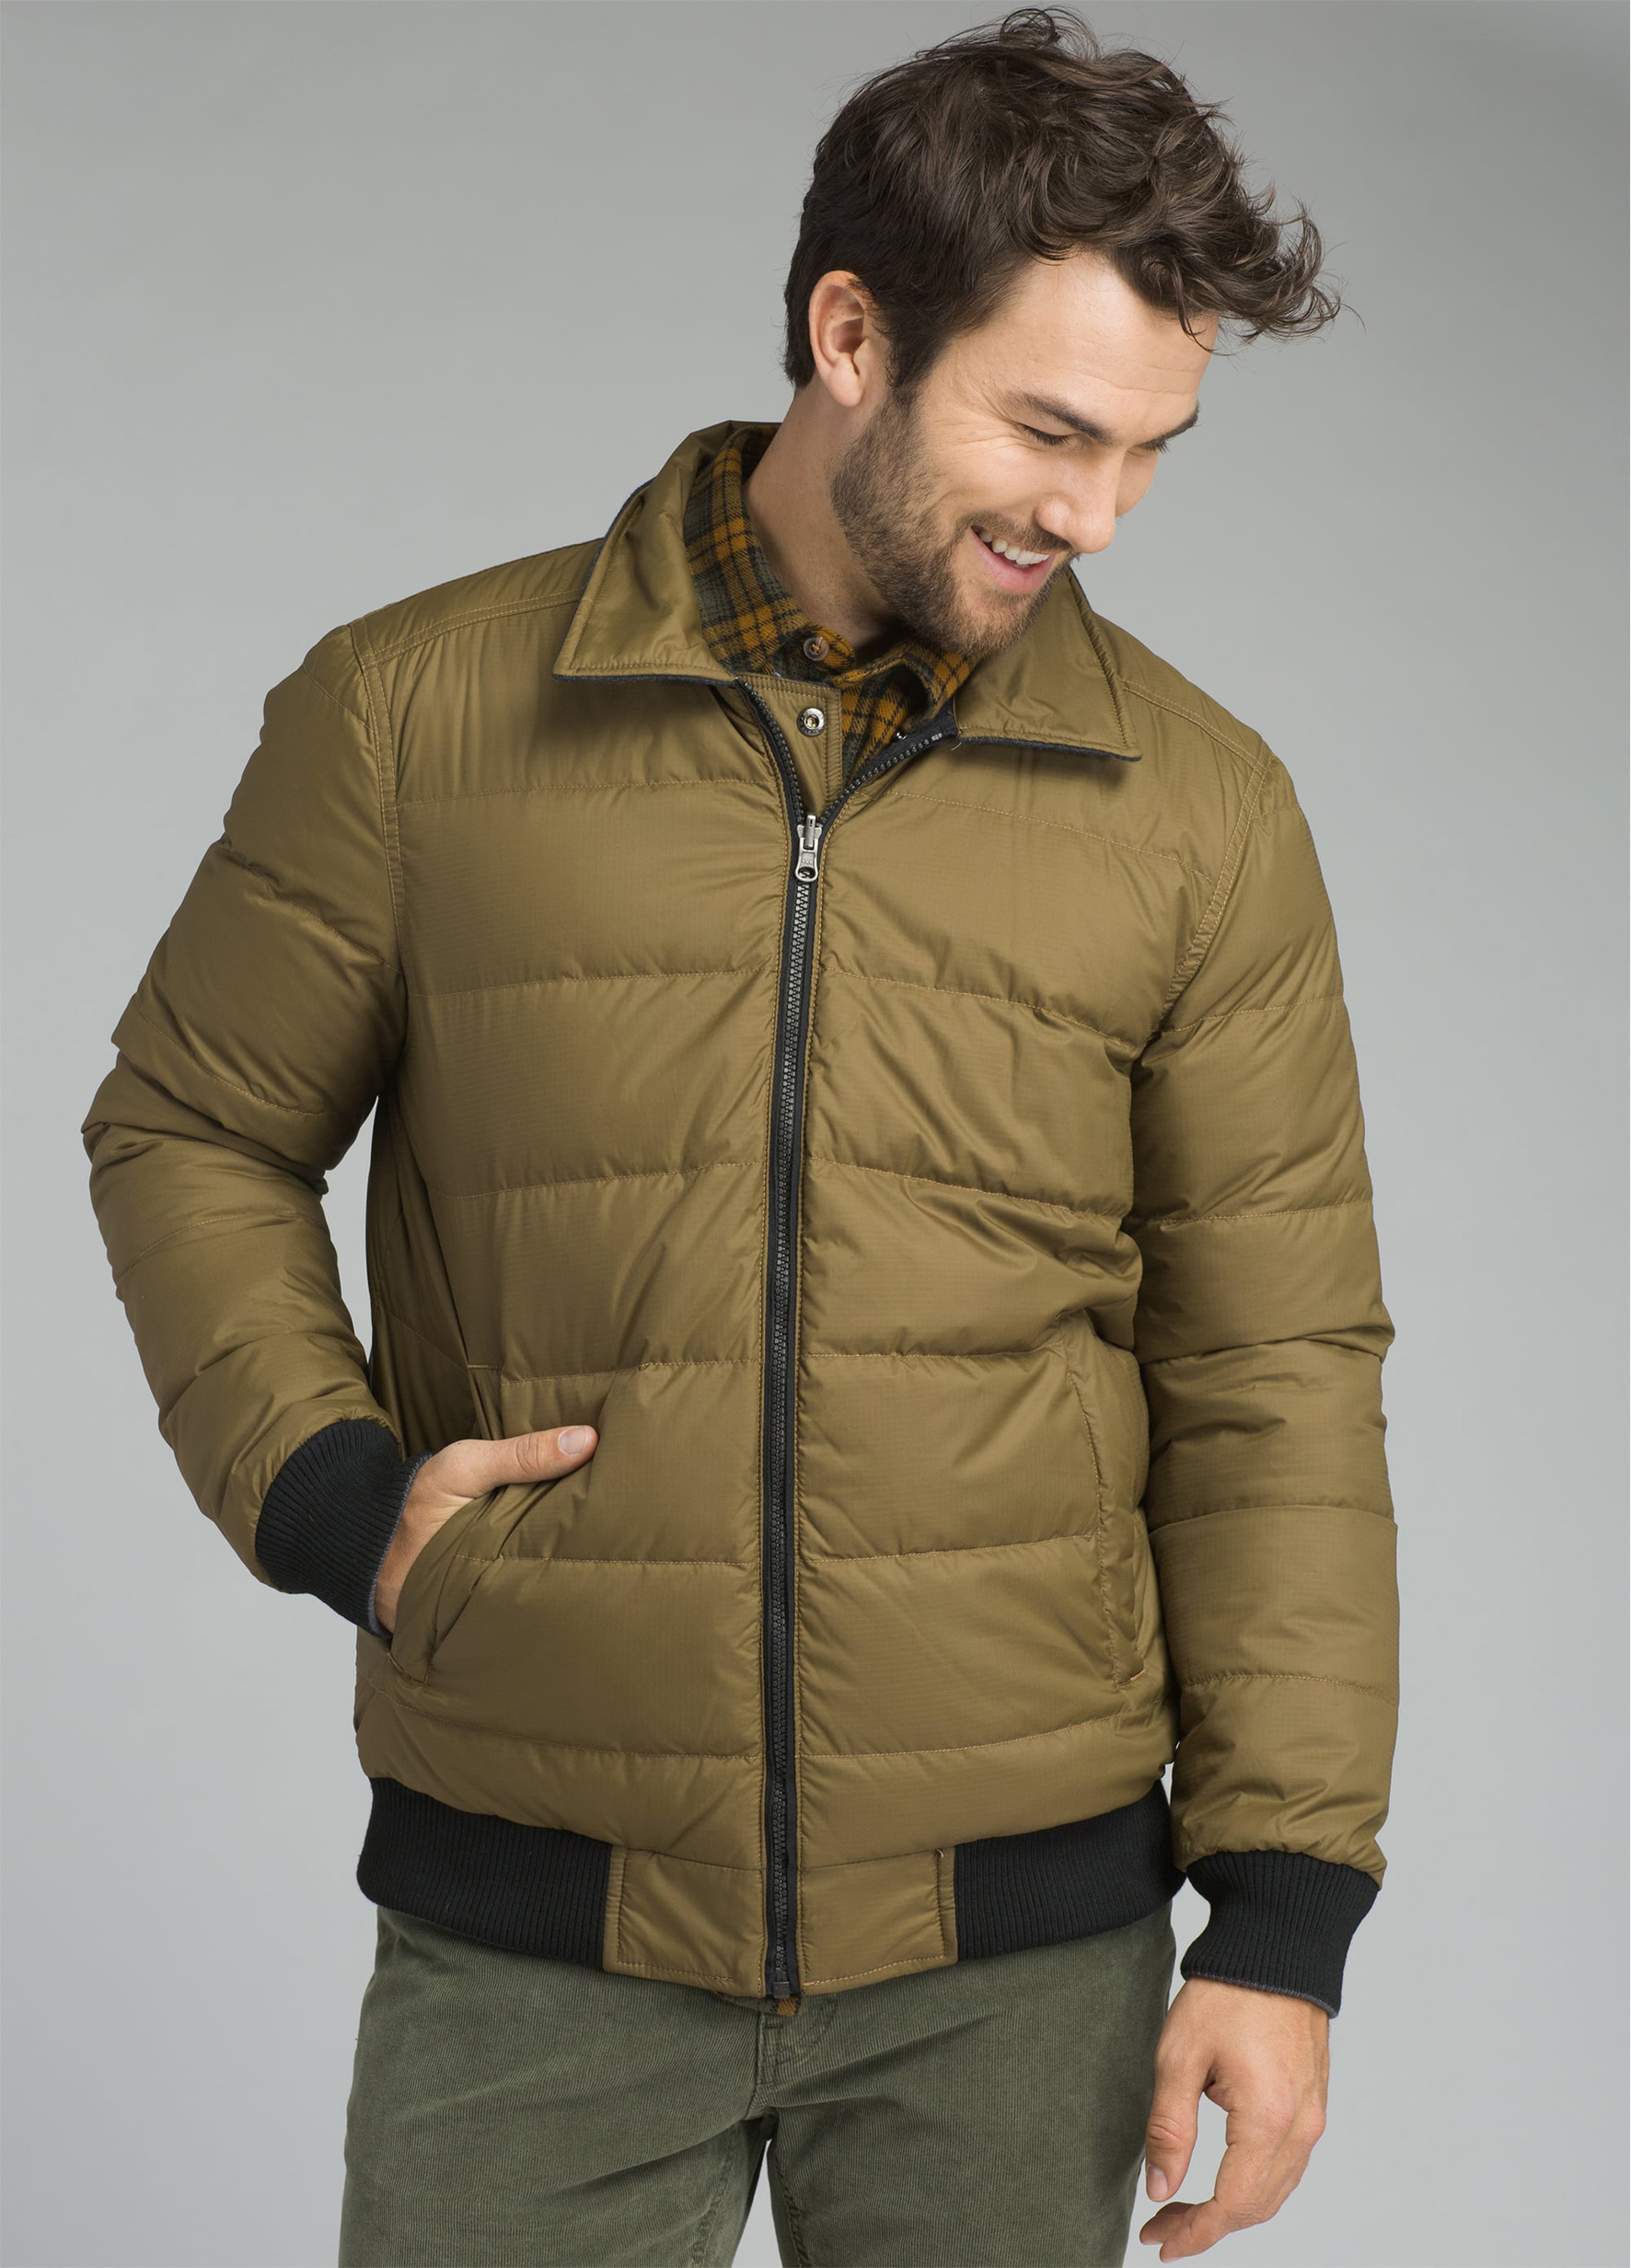 Press release: B-Side Jacket – sustainable & reversible winter jacket ...